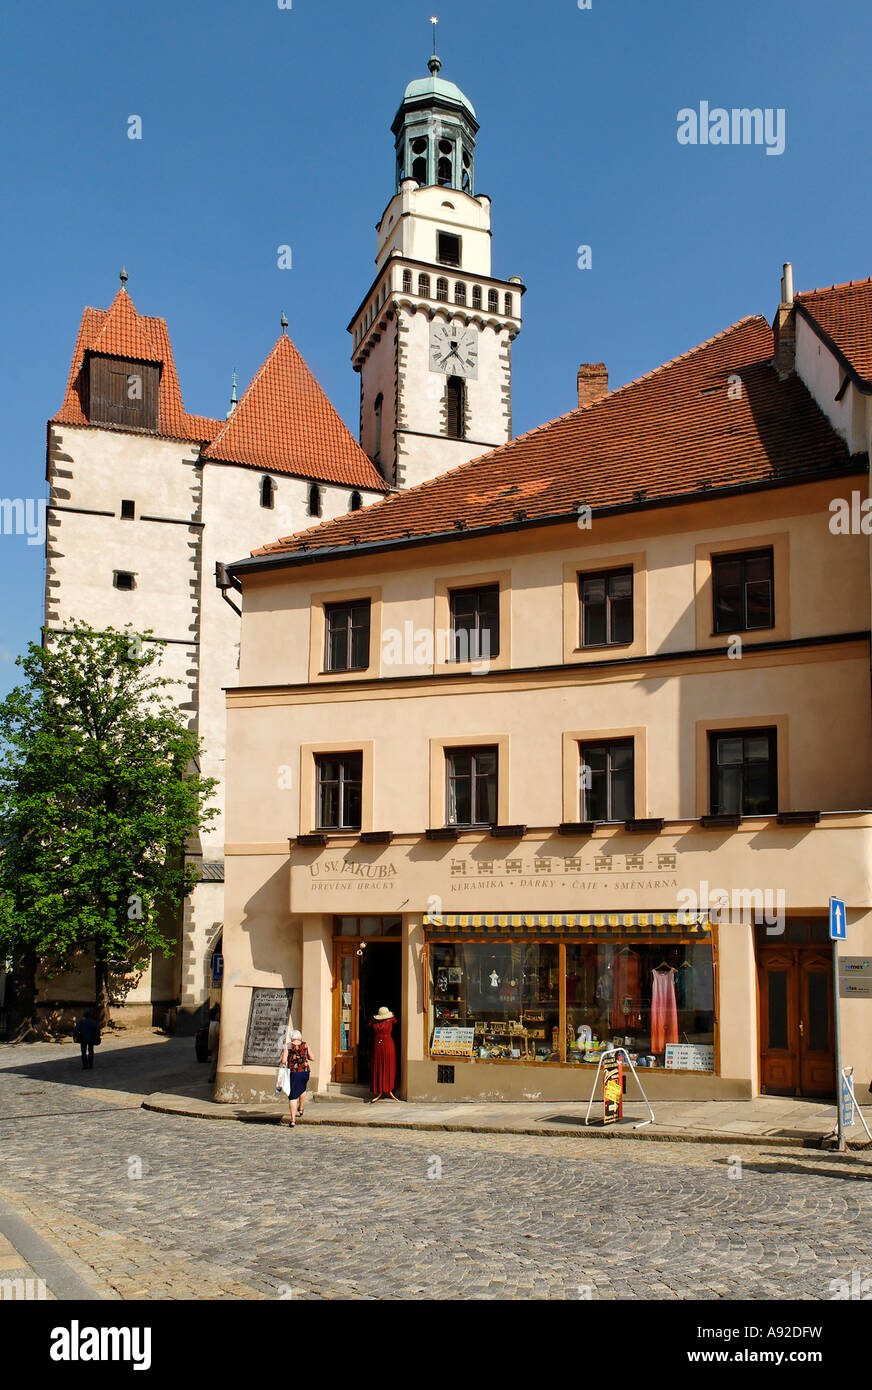 Historic old town of Prachatice, Bohemia, Czech Republic Stock Photo - Alamy